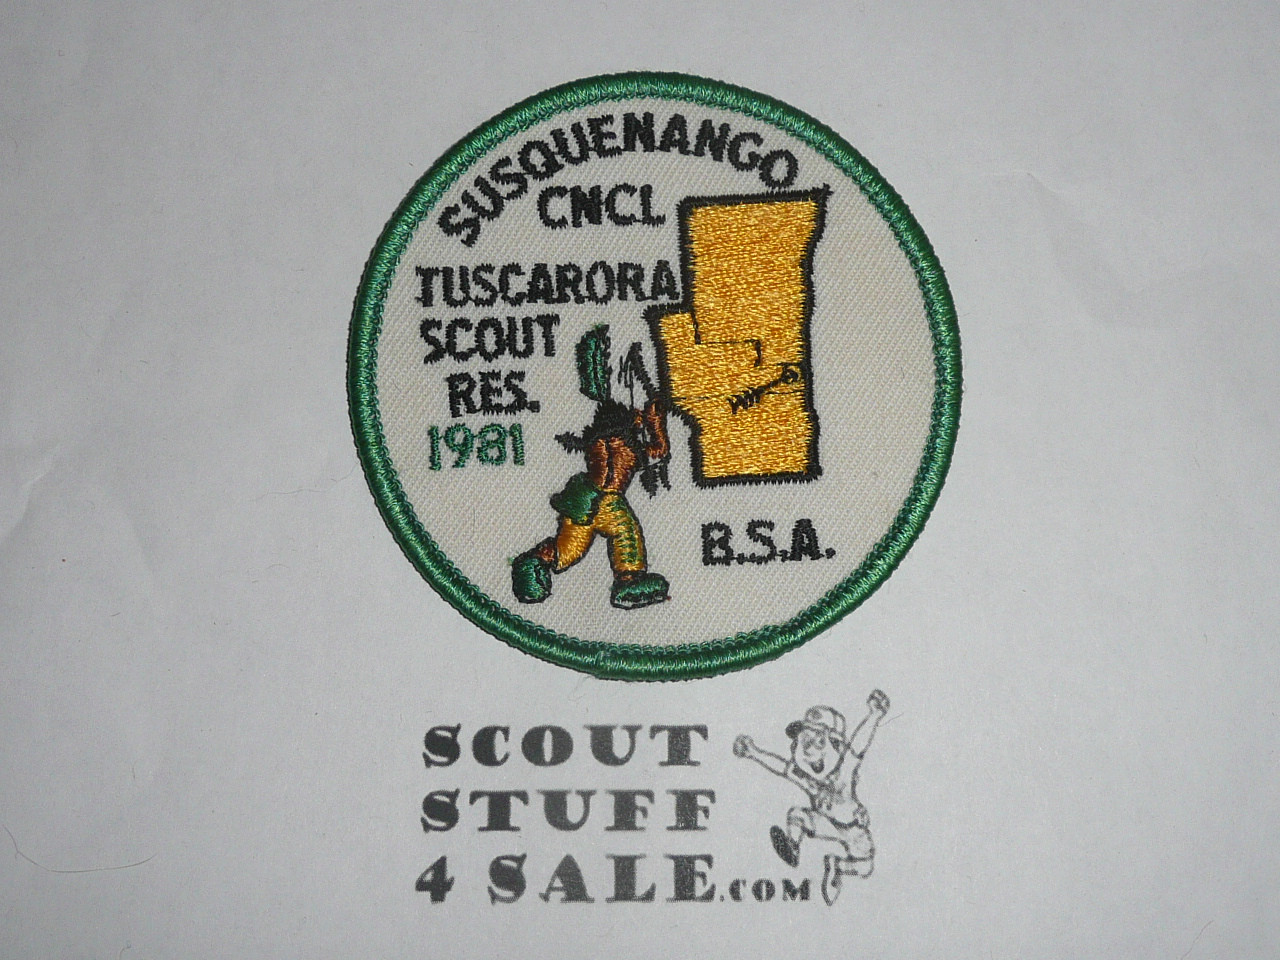 Tuscarora Scout Reservation Patch, Susquenango Council, 1981